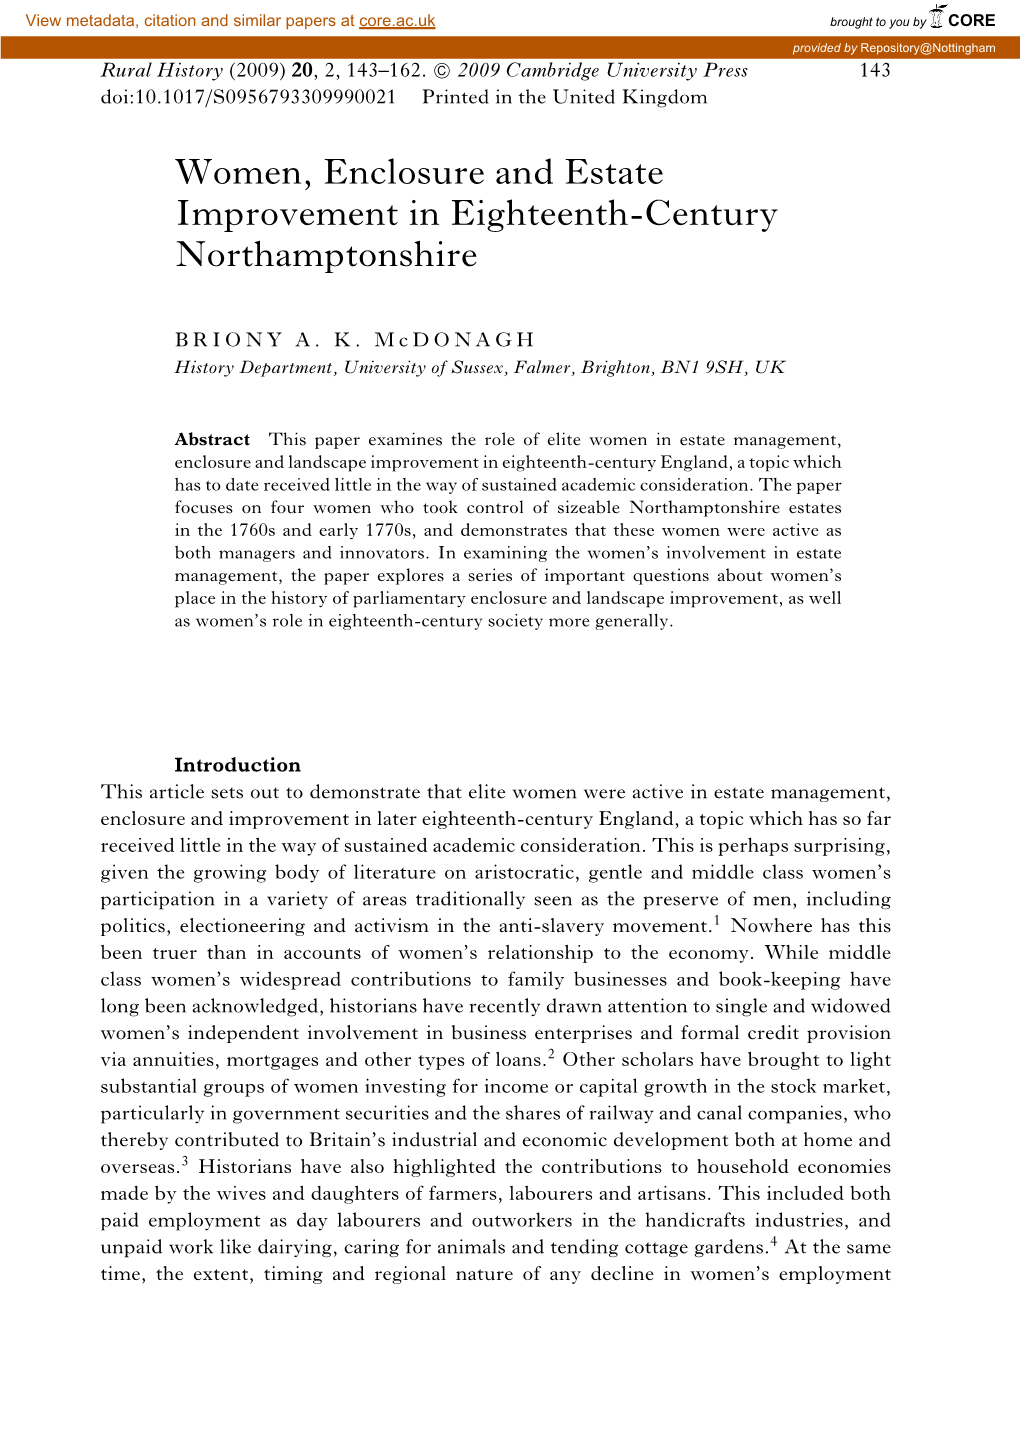 Women, Enclosure and Estate Improvement in Eighteenth-Century Northamptonshire